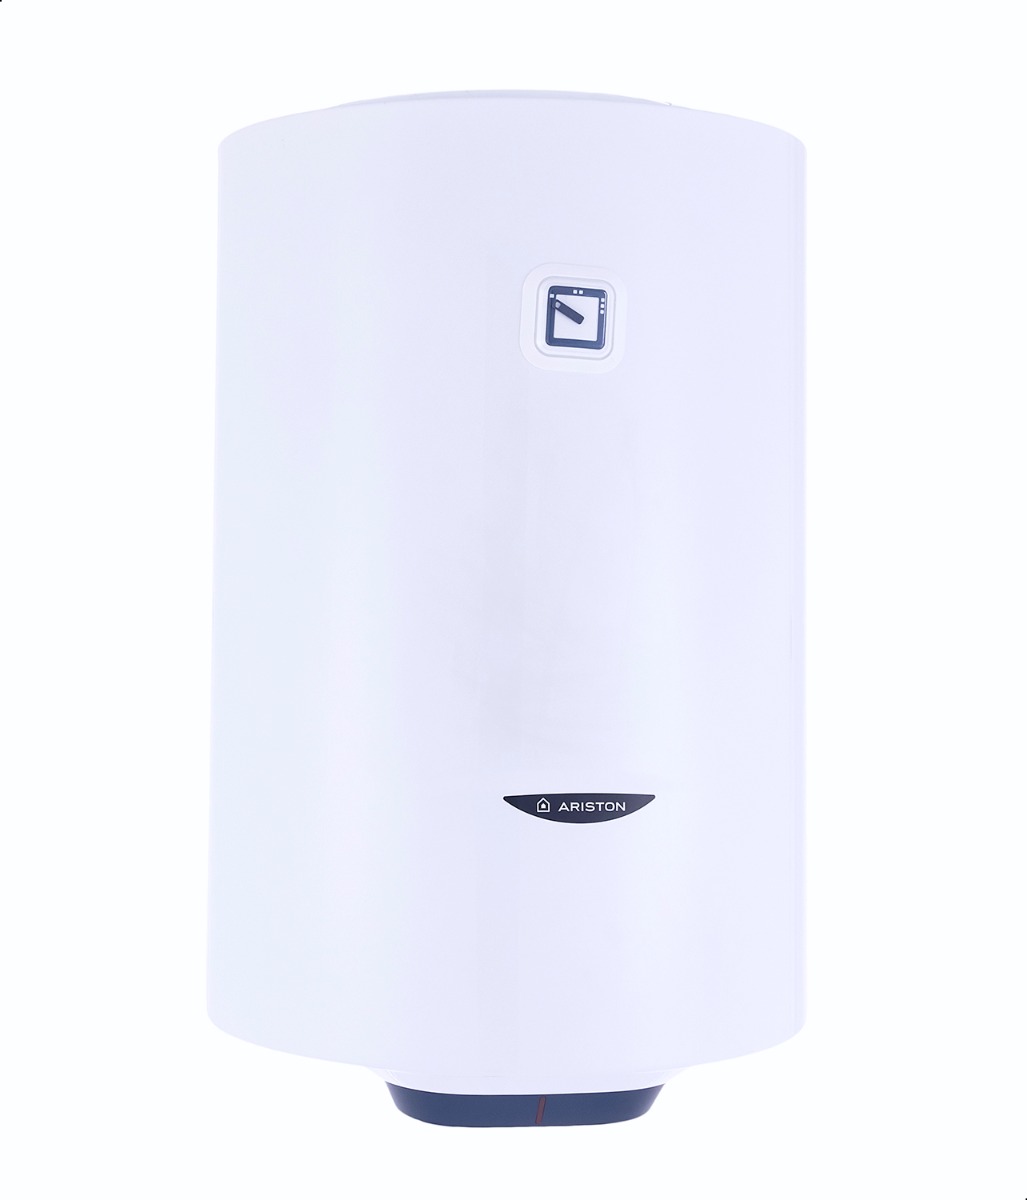 Ariston Electric Water Heater, 80 Liter, White - BLU1R80VEG